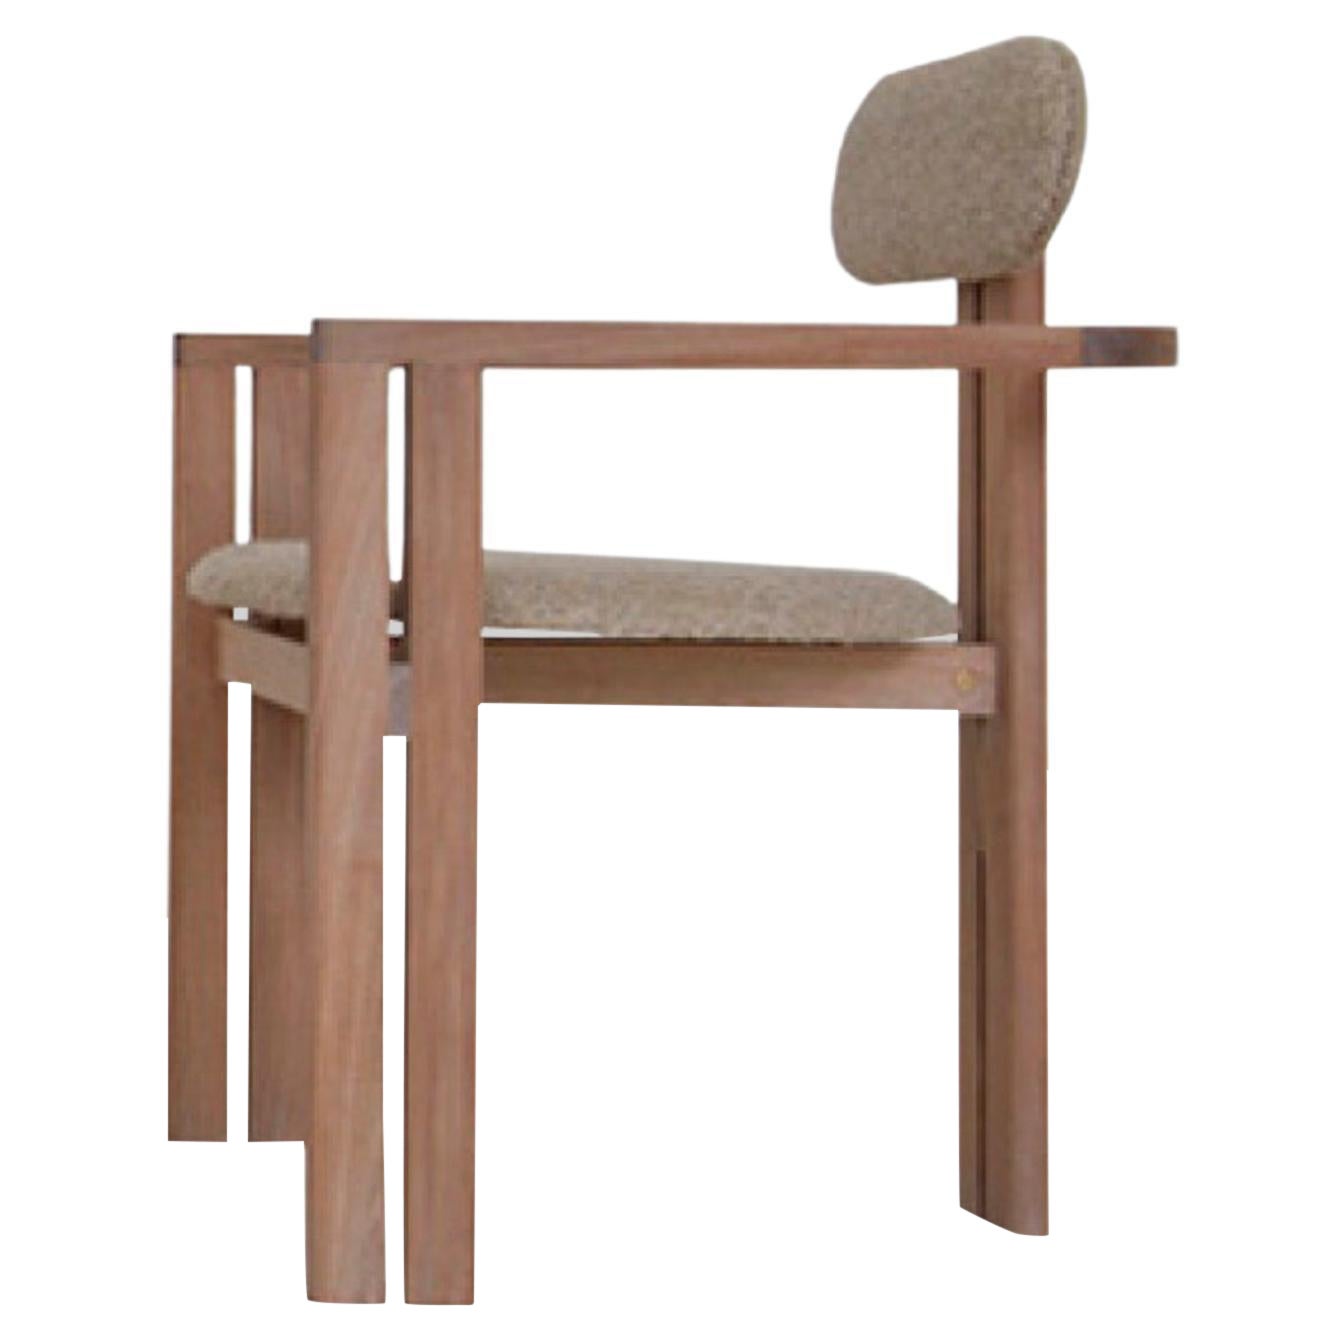 Simplon Dining Chair by Atra Design